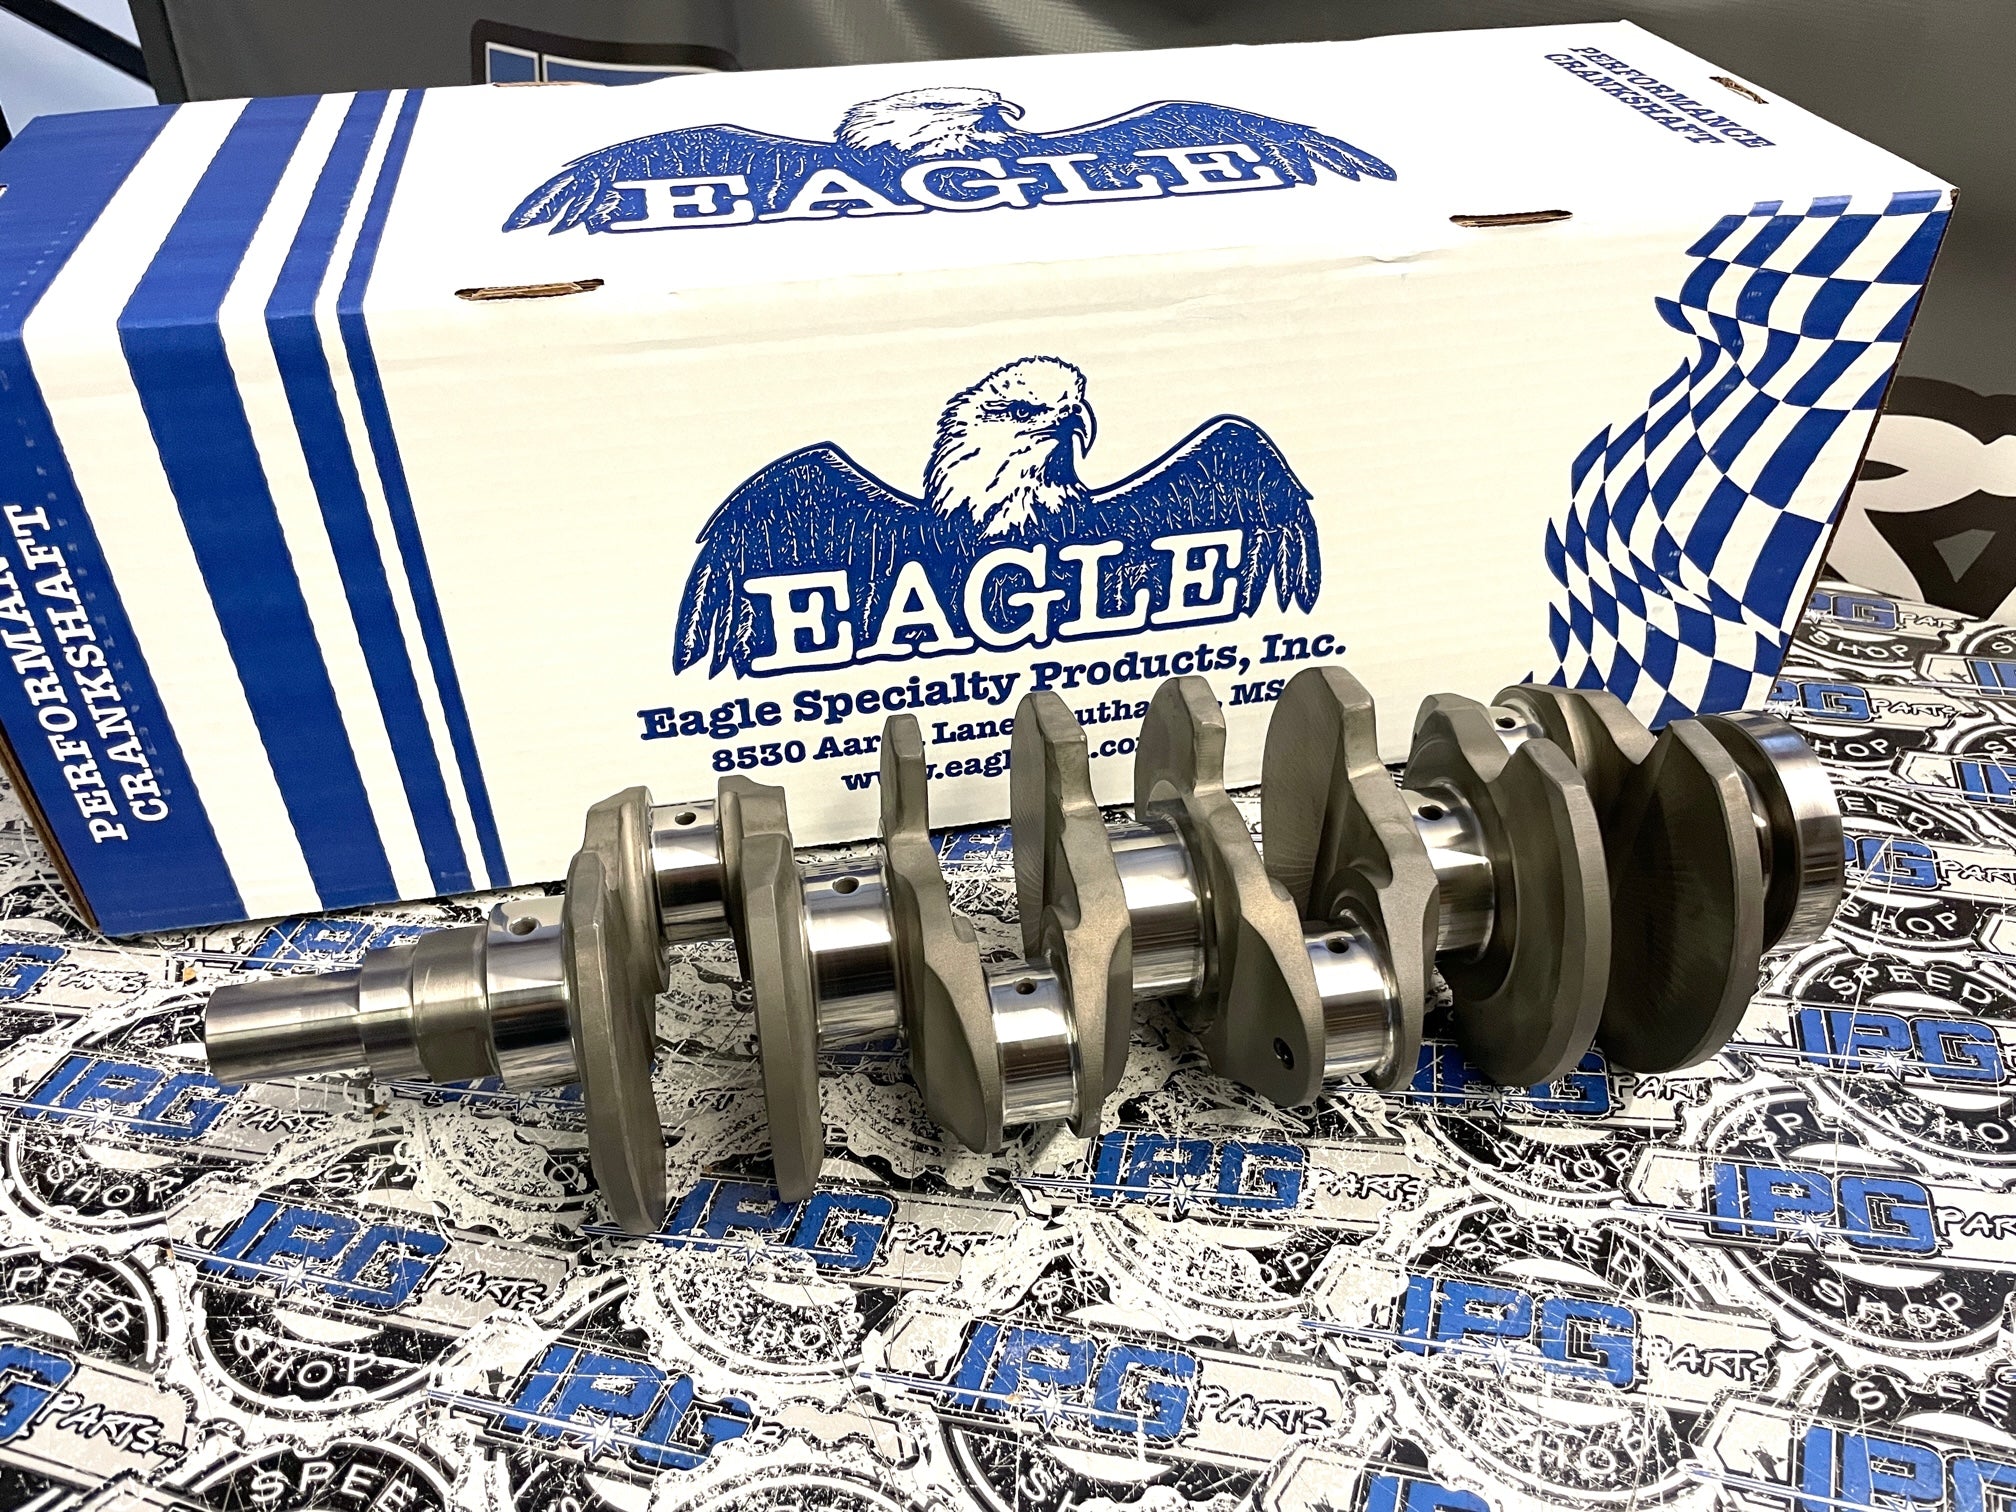 Eagle Forged 4340 Crankshaft for Honda B18c, B18c1, B18c5 Engines, 87.2mm Stroke